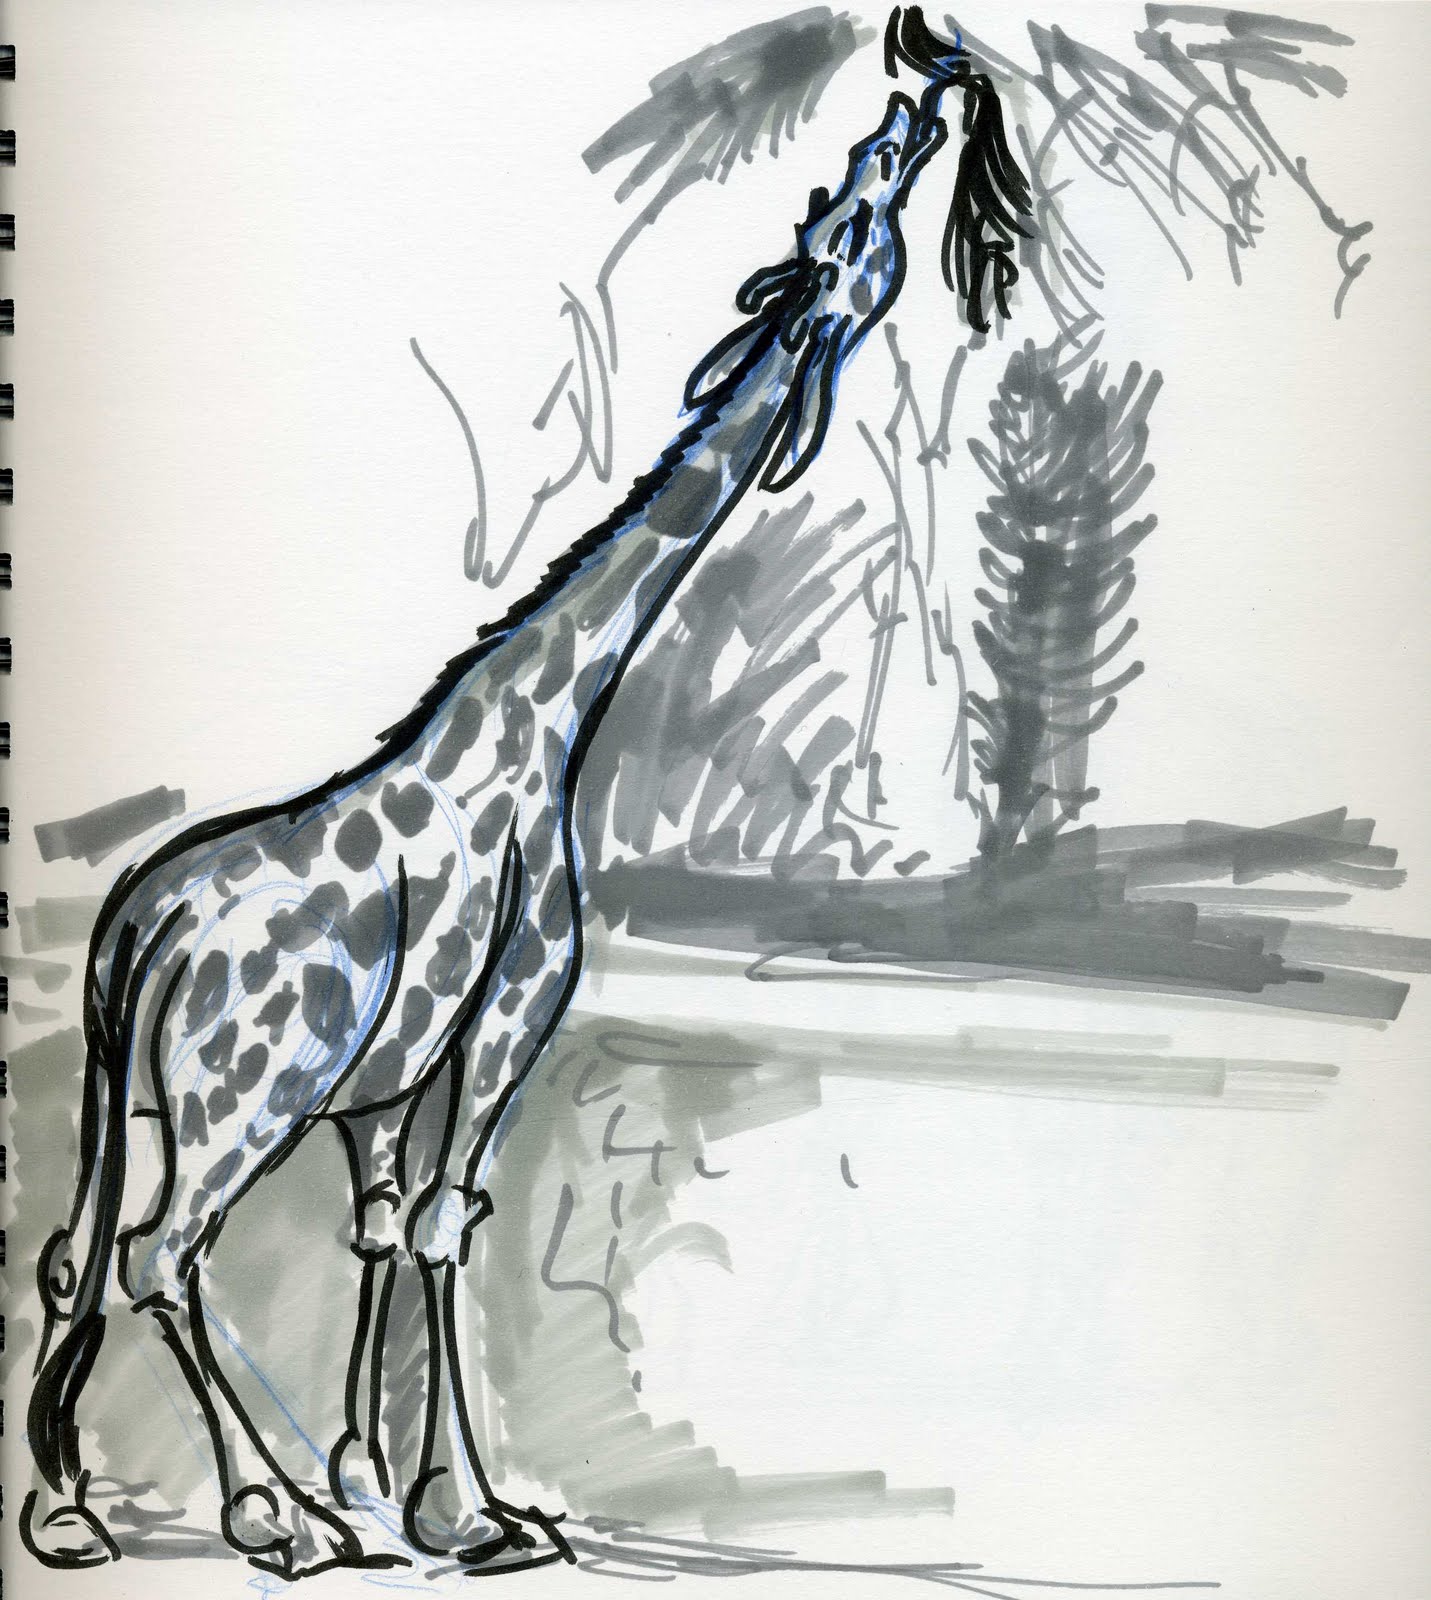 Joe Apel: MORE Zoo Drawings